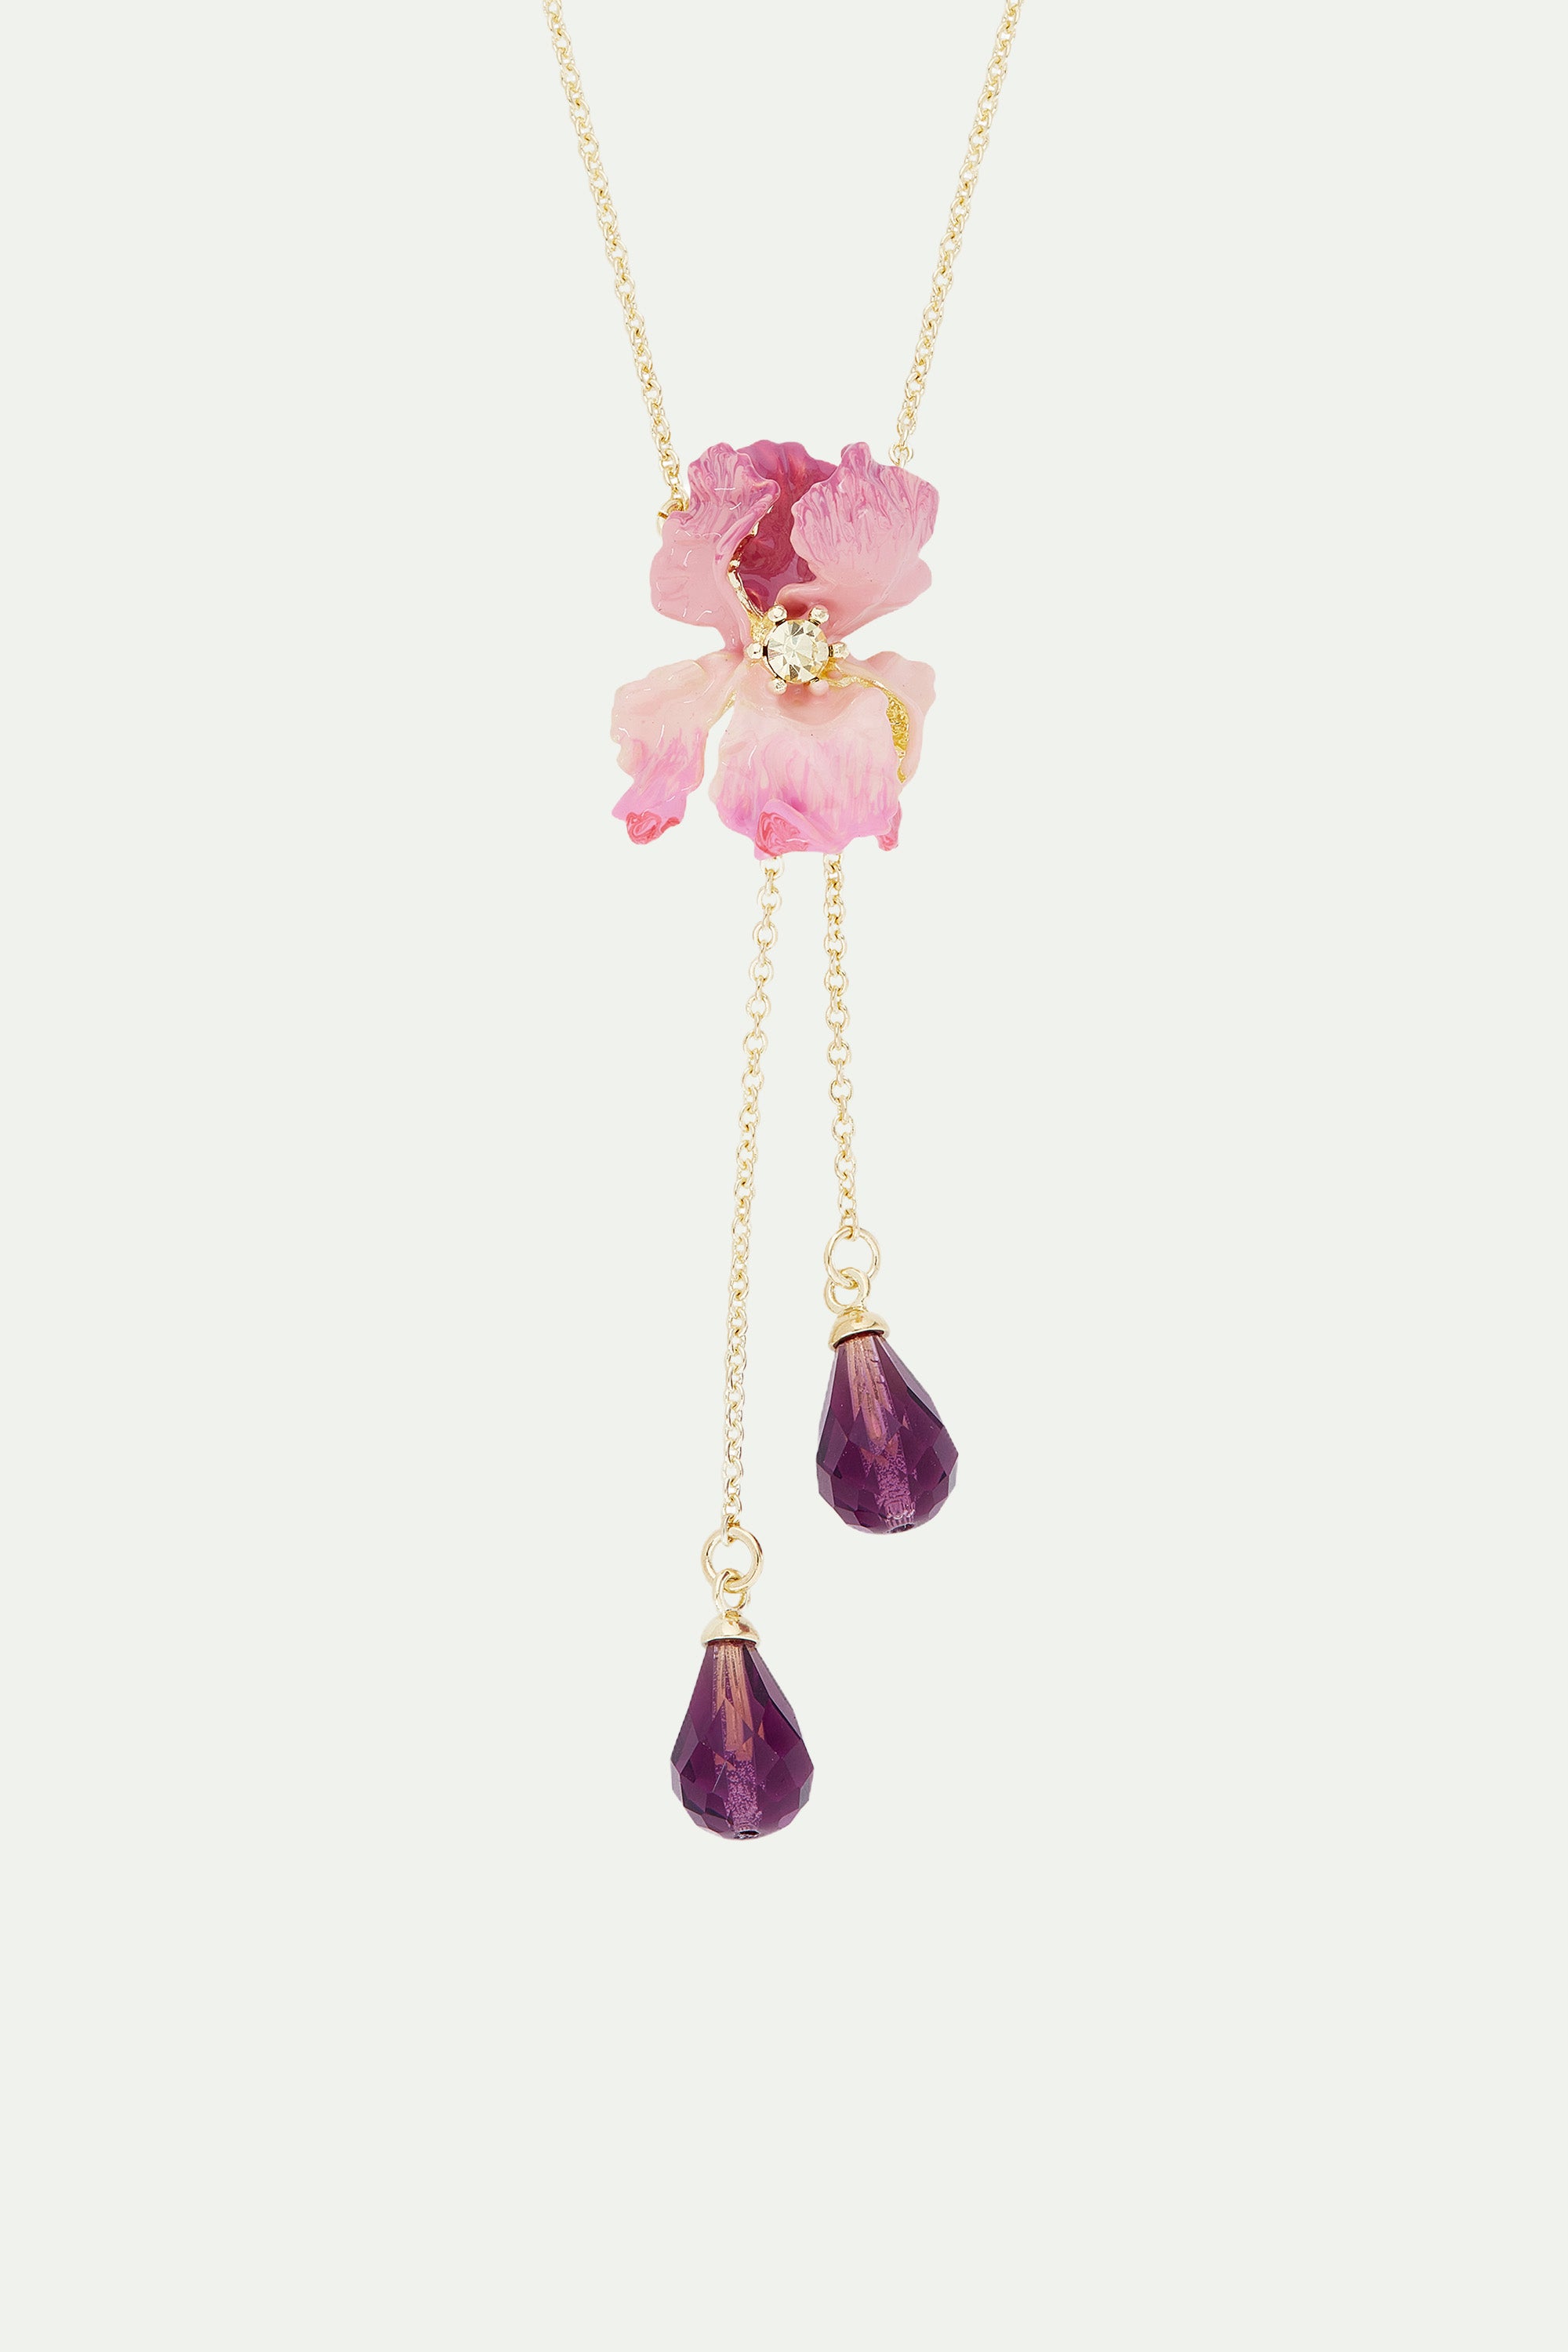 Bearded Iris pendant necklace